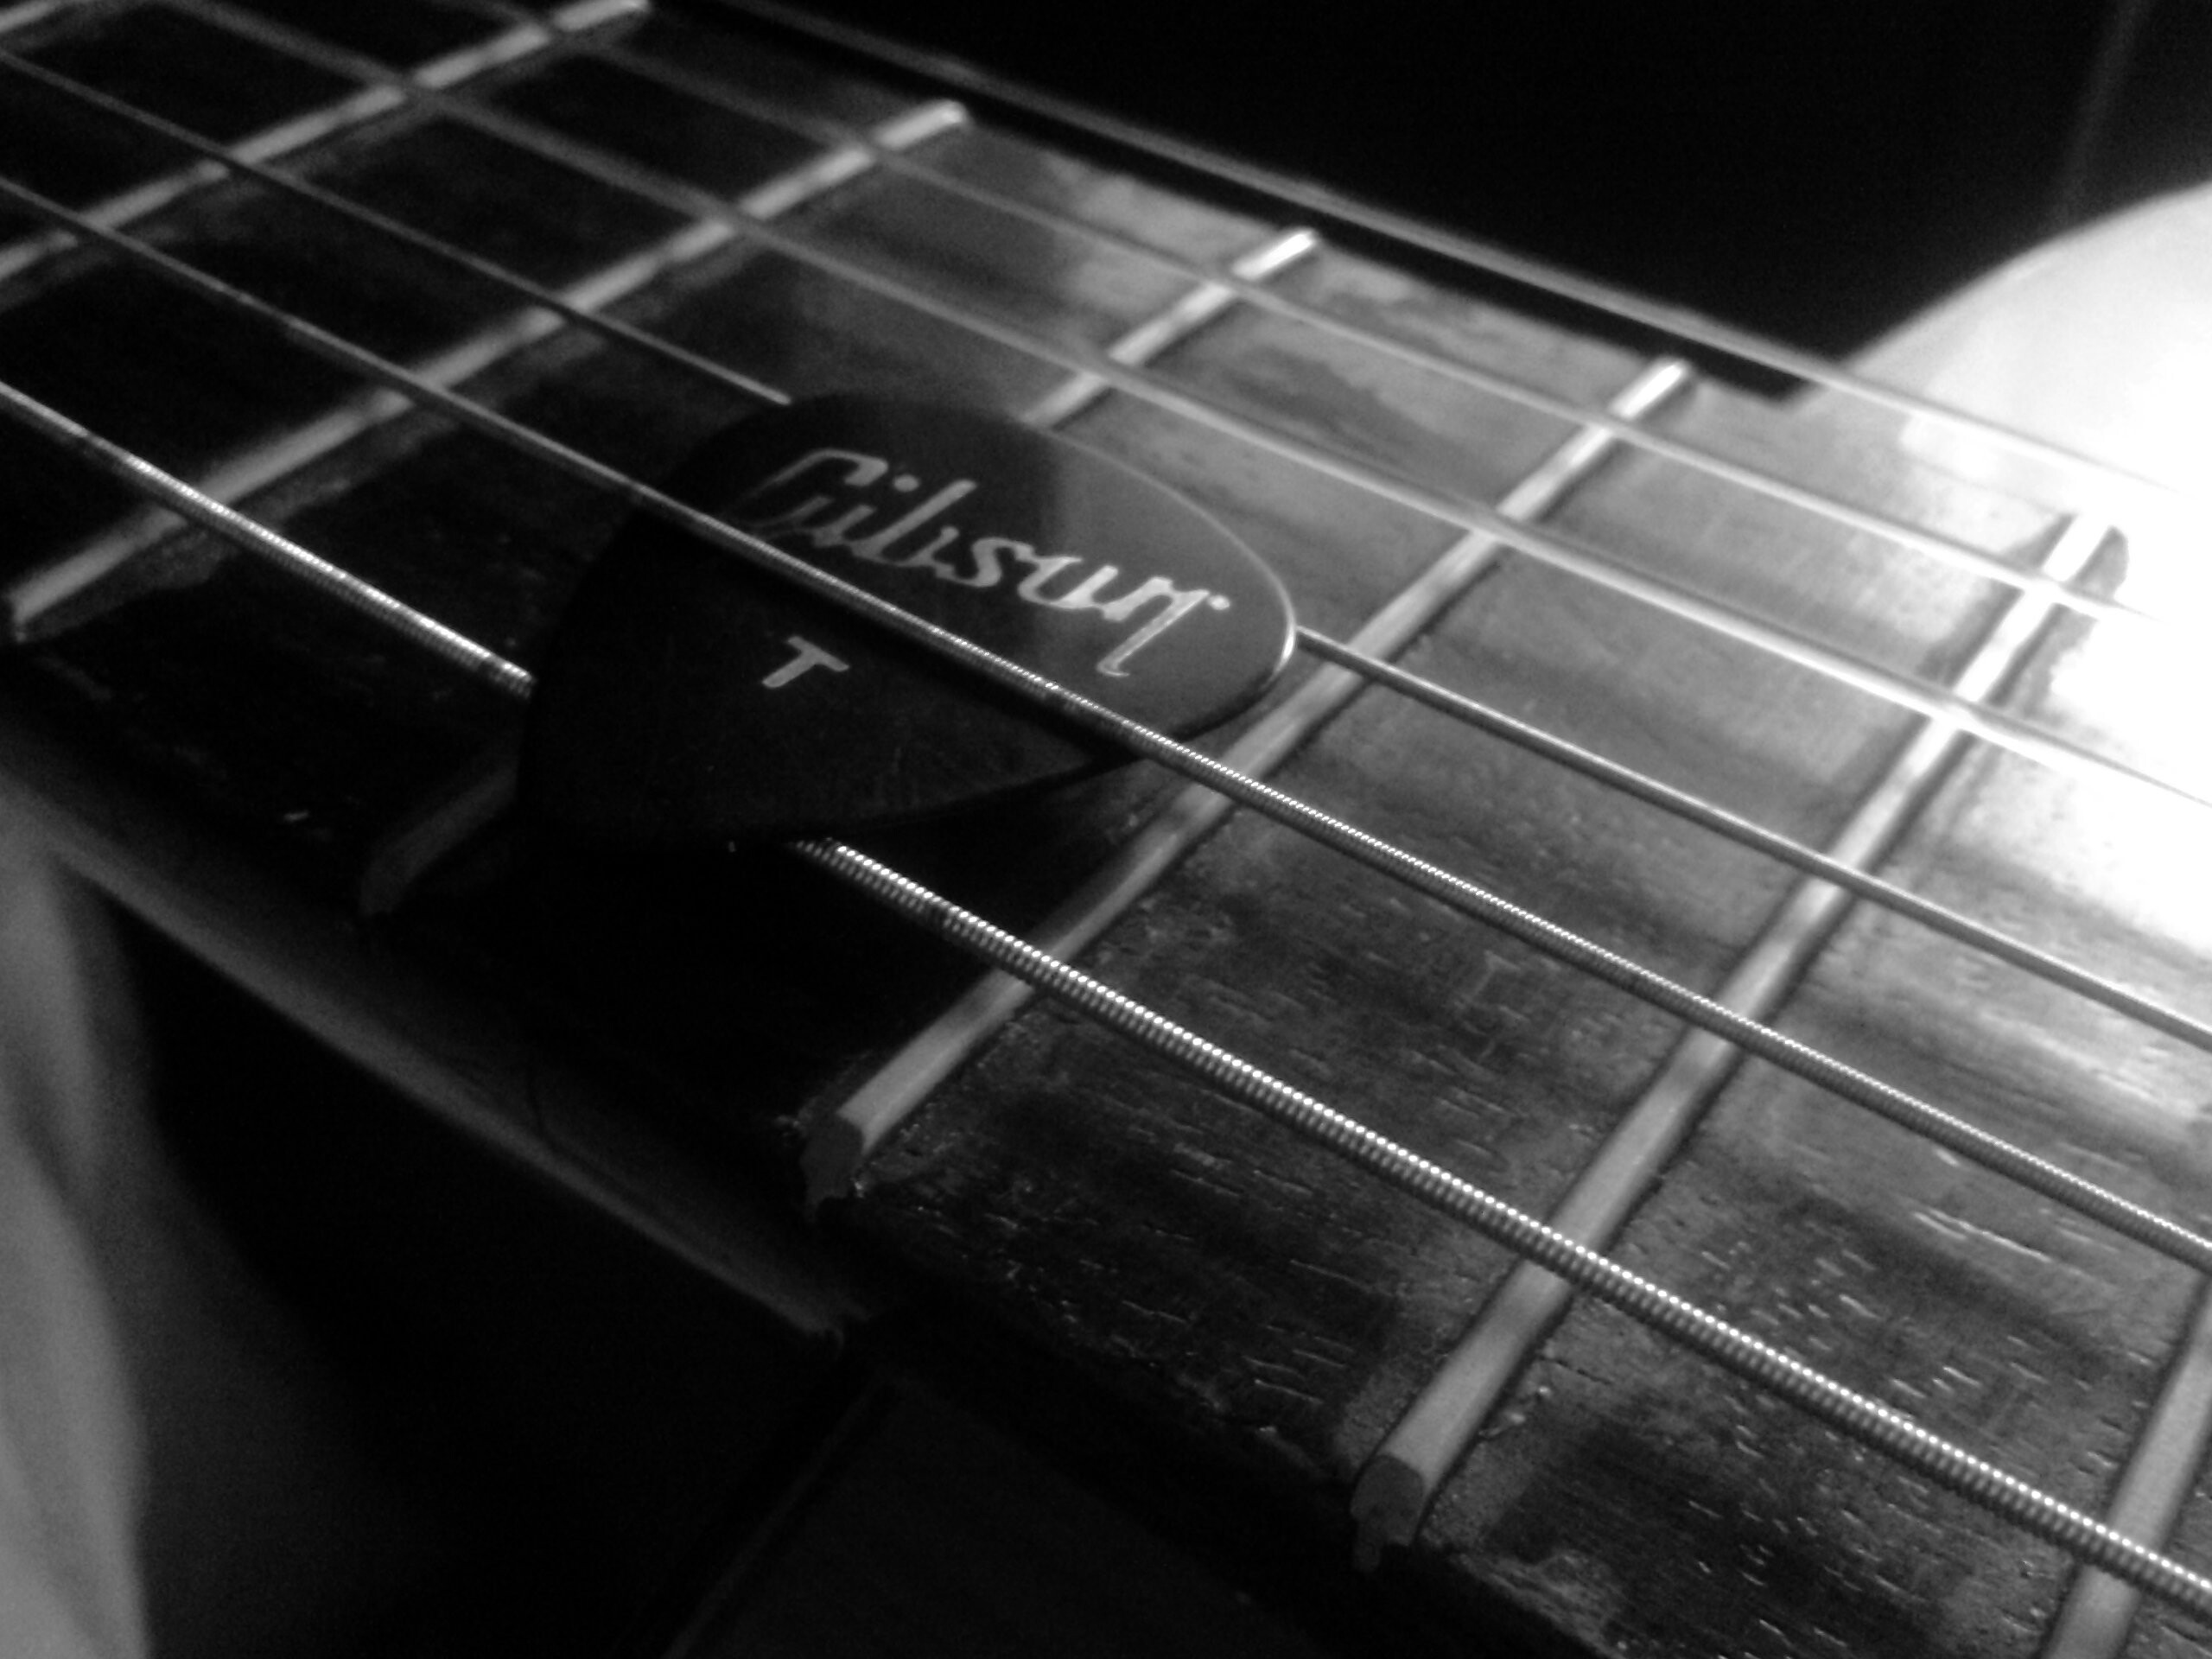 Gibson Guitar: An American manufacturer of guitars and professional audio equipment from Kalamazoo, Michigan. 2560x1920 HD Wallpaper.